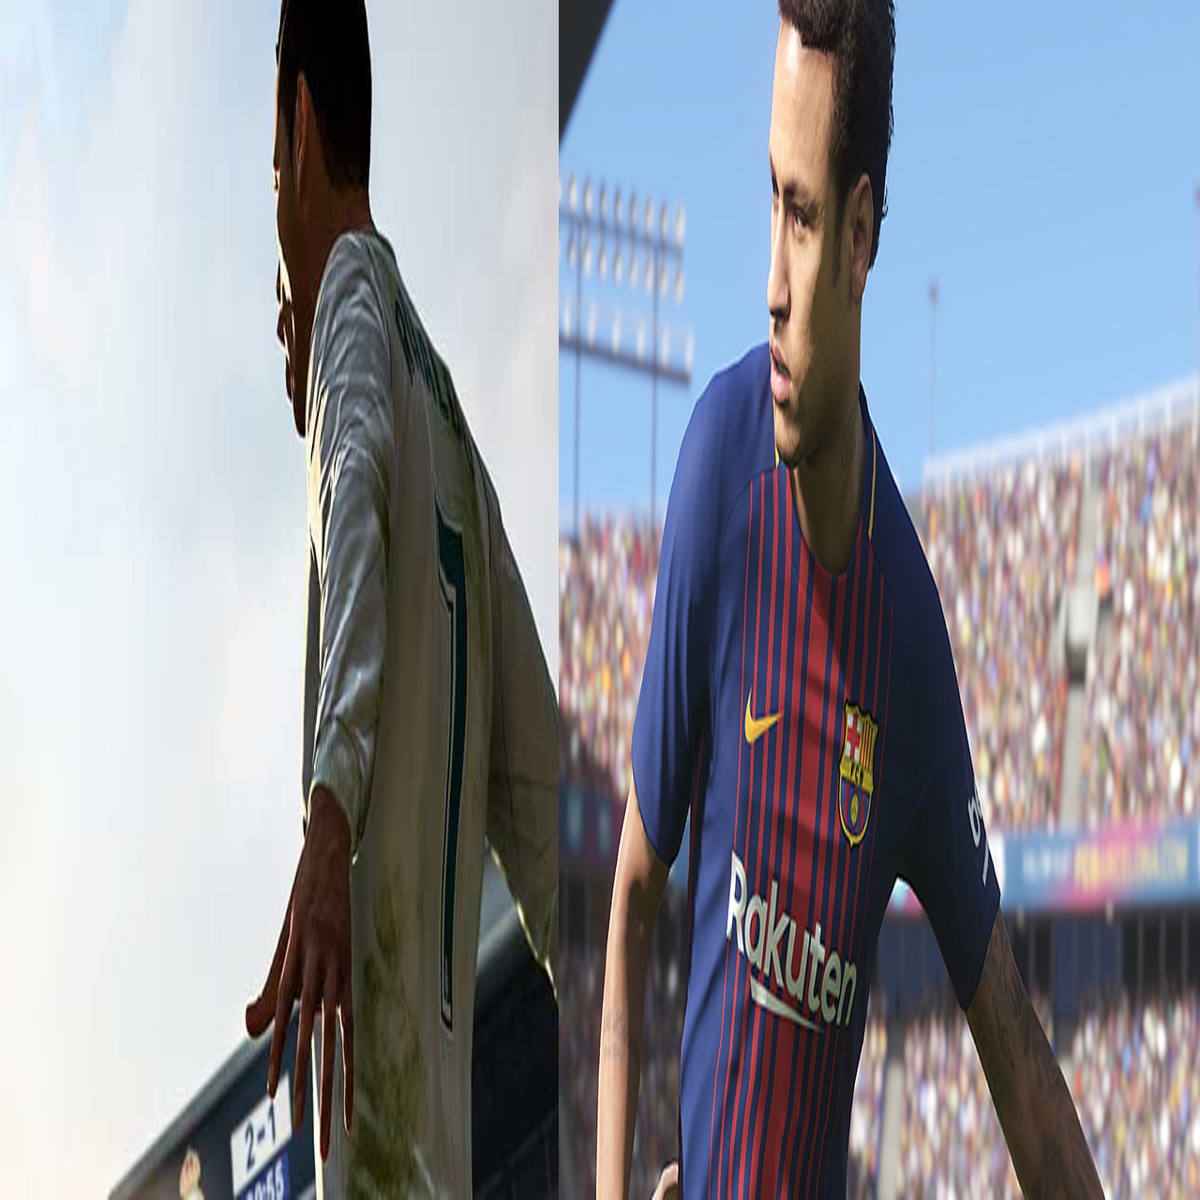 FIFA 18  Ps3 vs Ps4 Graphics & Gameplay Comparison 